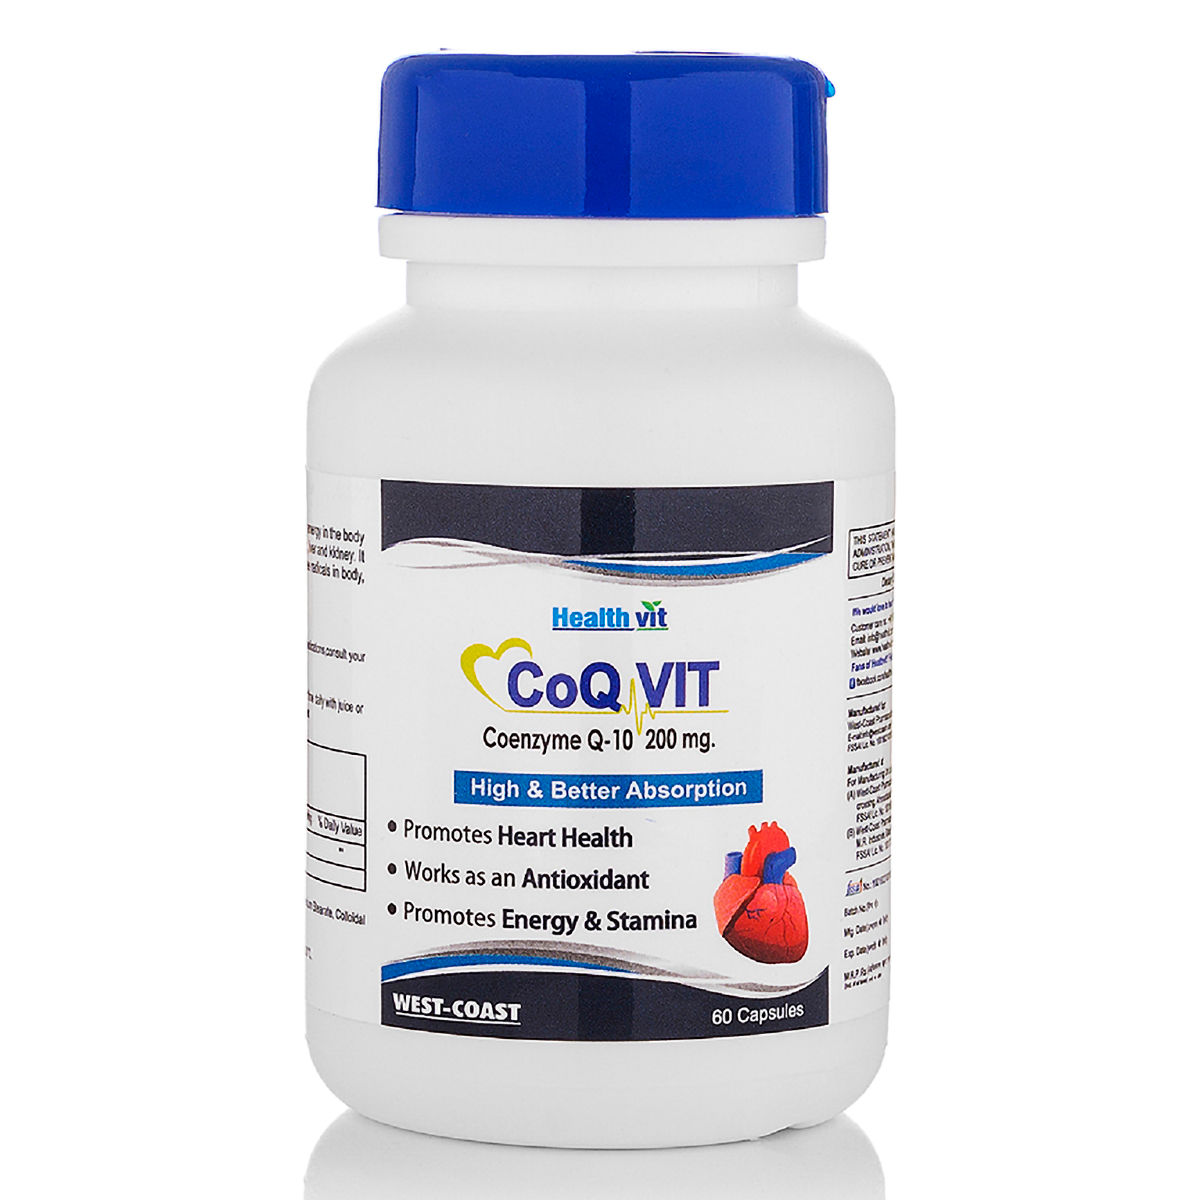 Buy Healthvit CoQvit Coenzyme Q-10 200mg, 60 Capsules Online